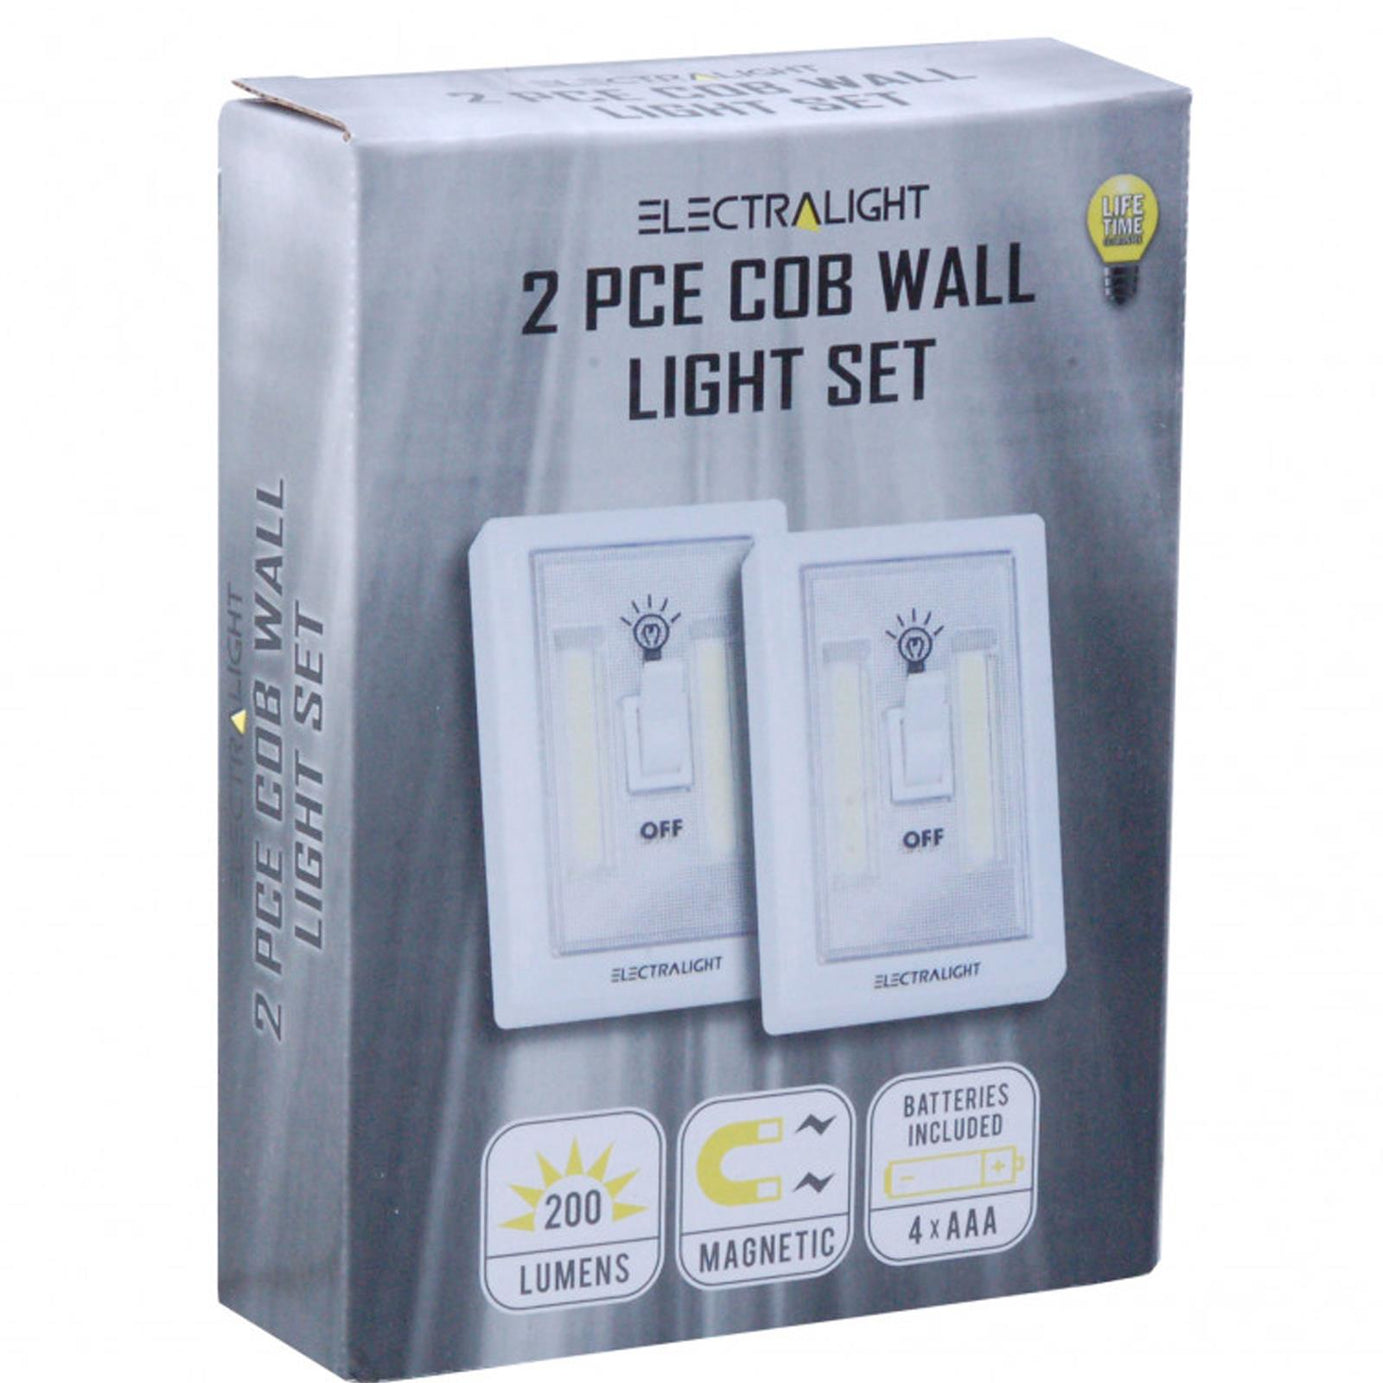 BlueSpot Electralight 2Pce COB Wall Light Set (200 Lumens) Cupboards Basements With Batteries